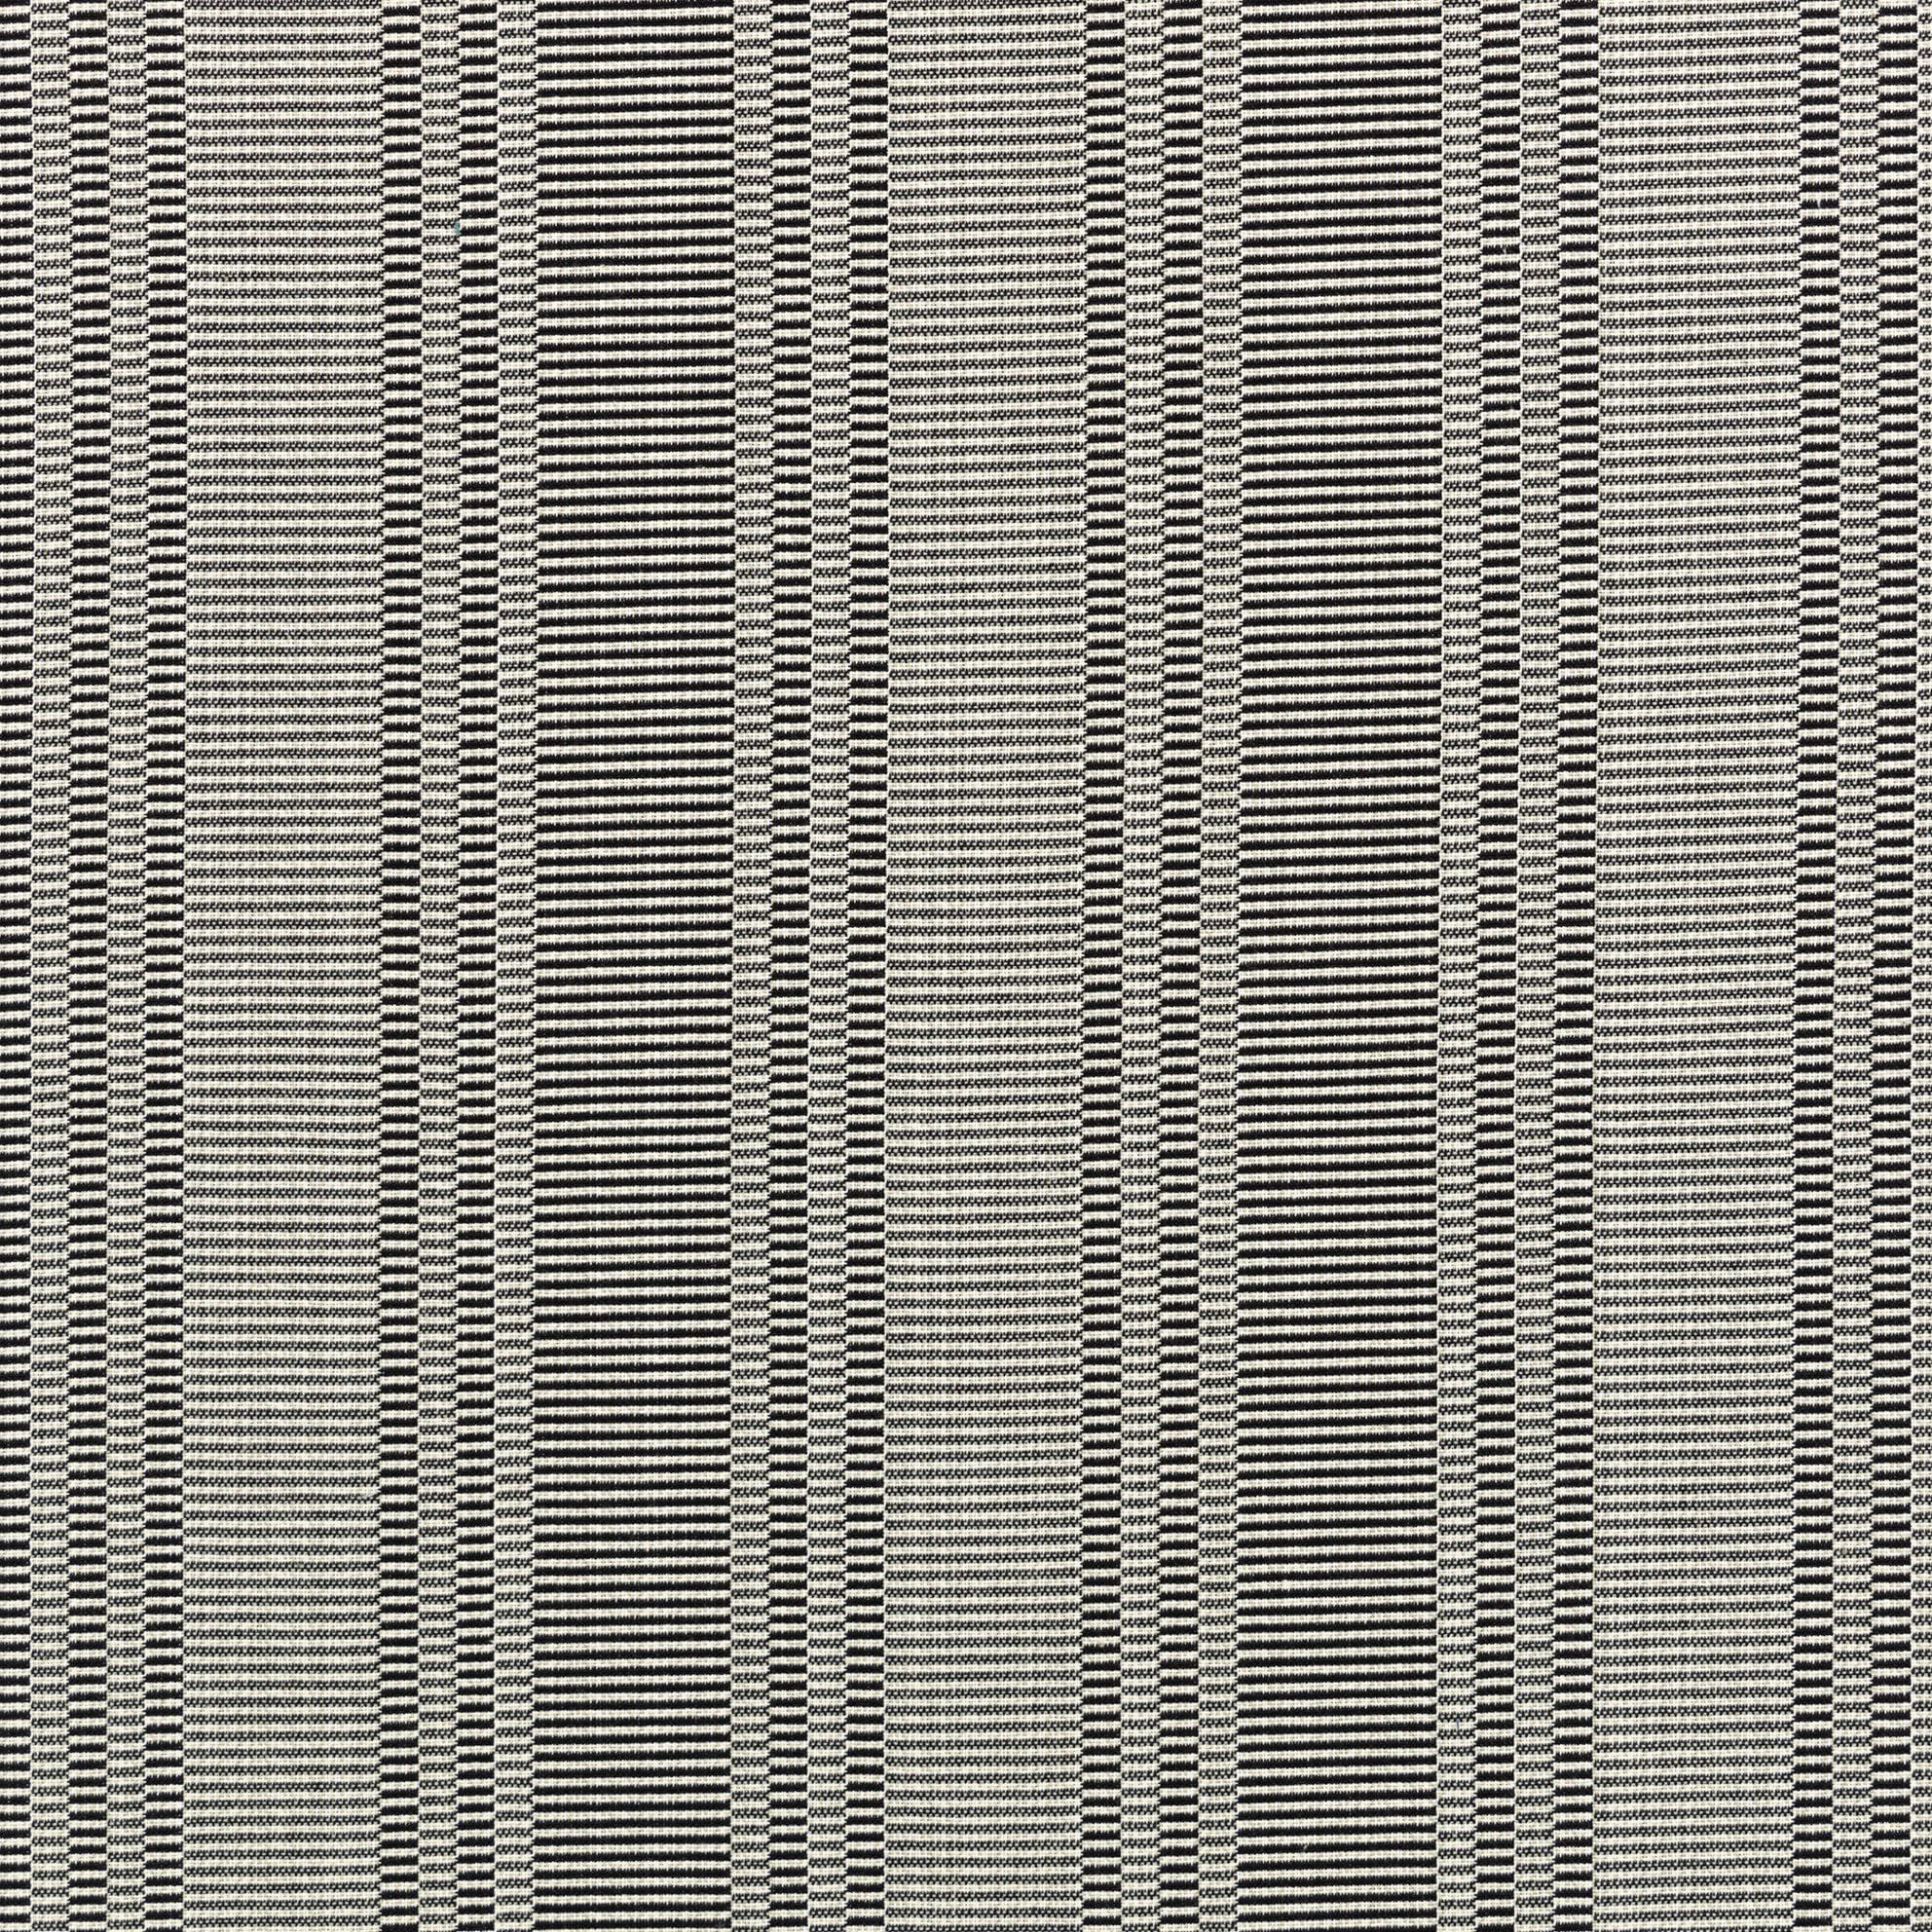 Eos Cotton Fabric - Grey | Nicholas Engert Interiors